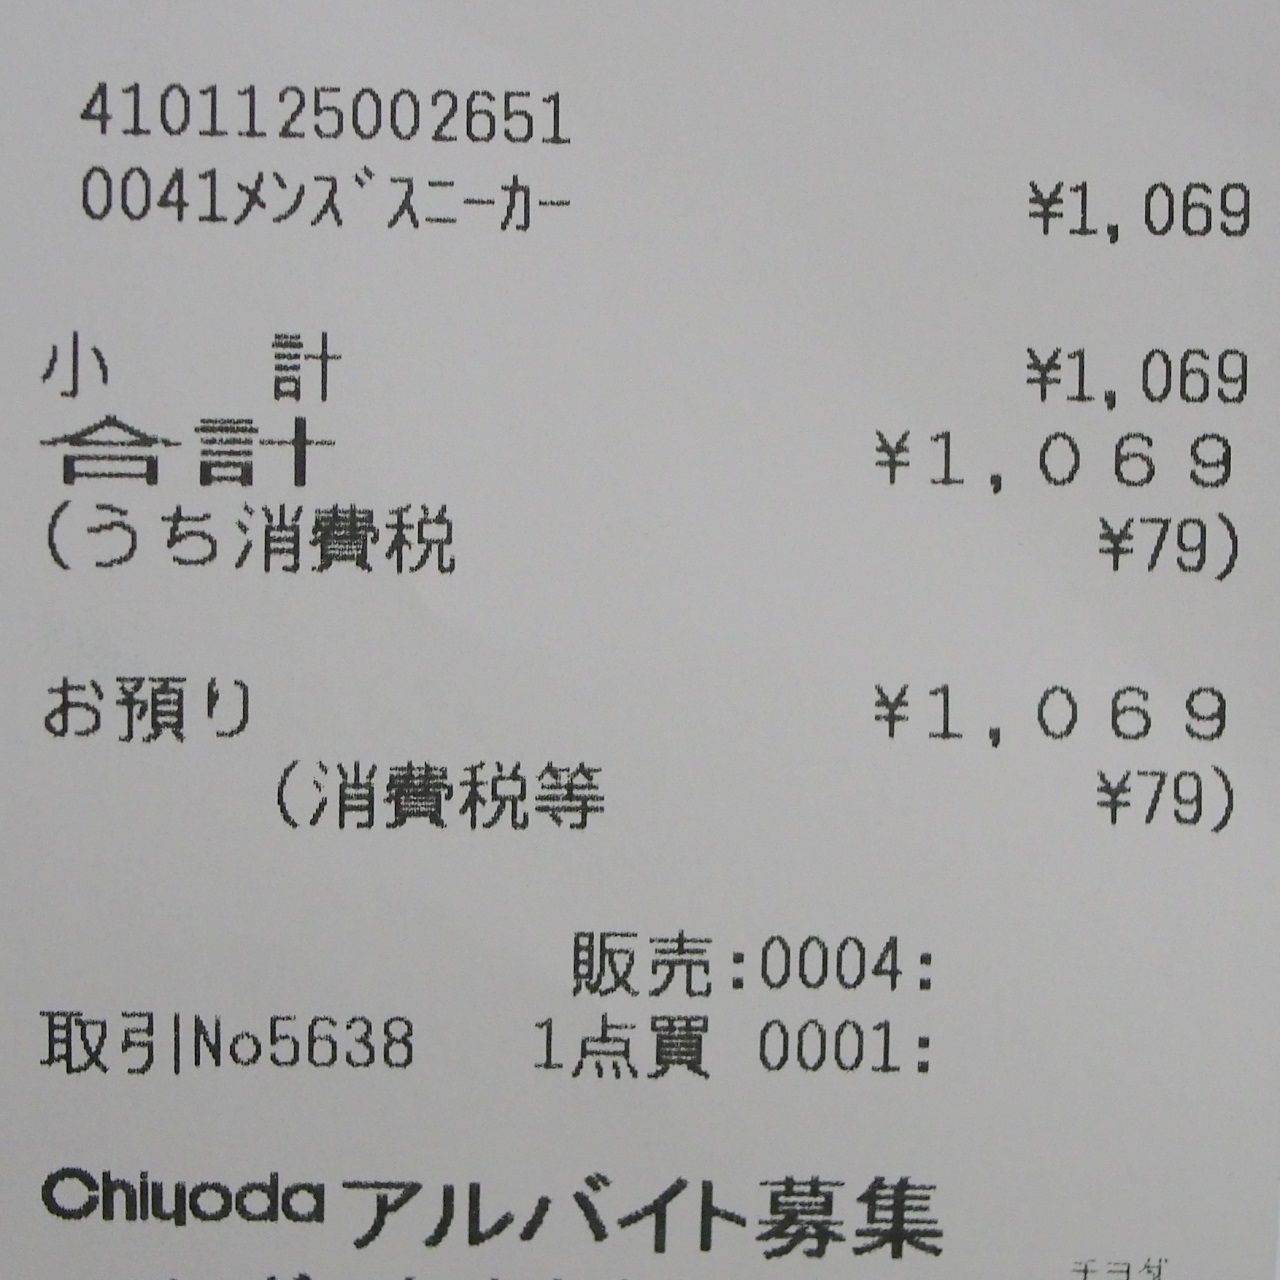 1,069円